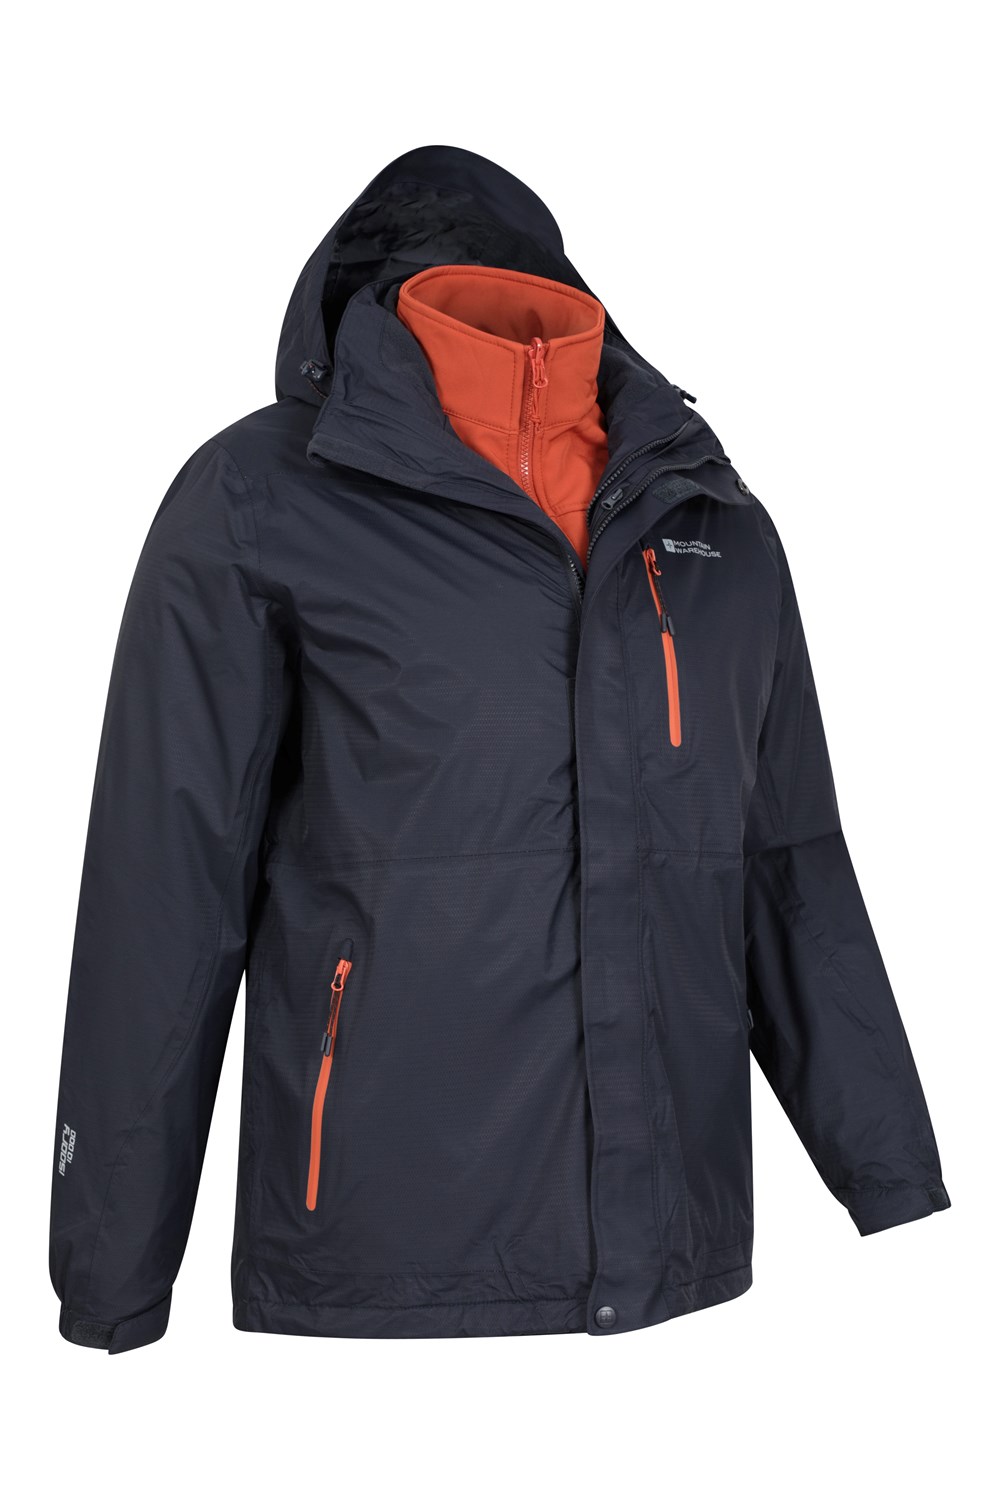 Mountain Warehouse Mens 3 in 1 Waterproof Jacket Rain Coat Softshell ...